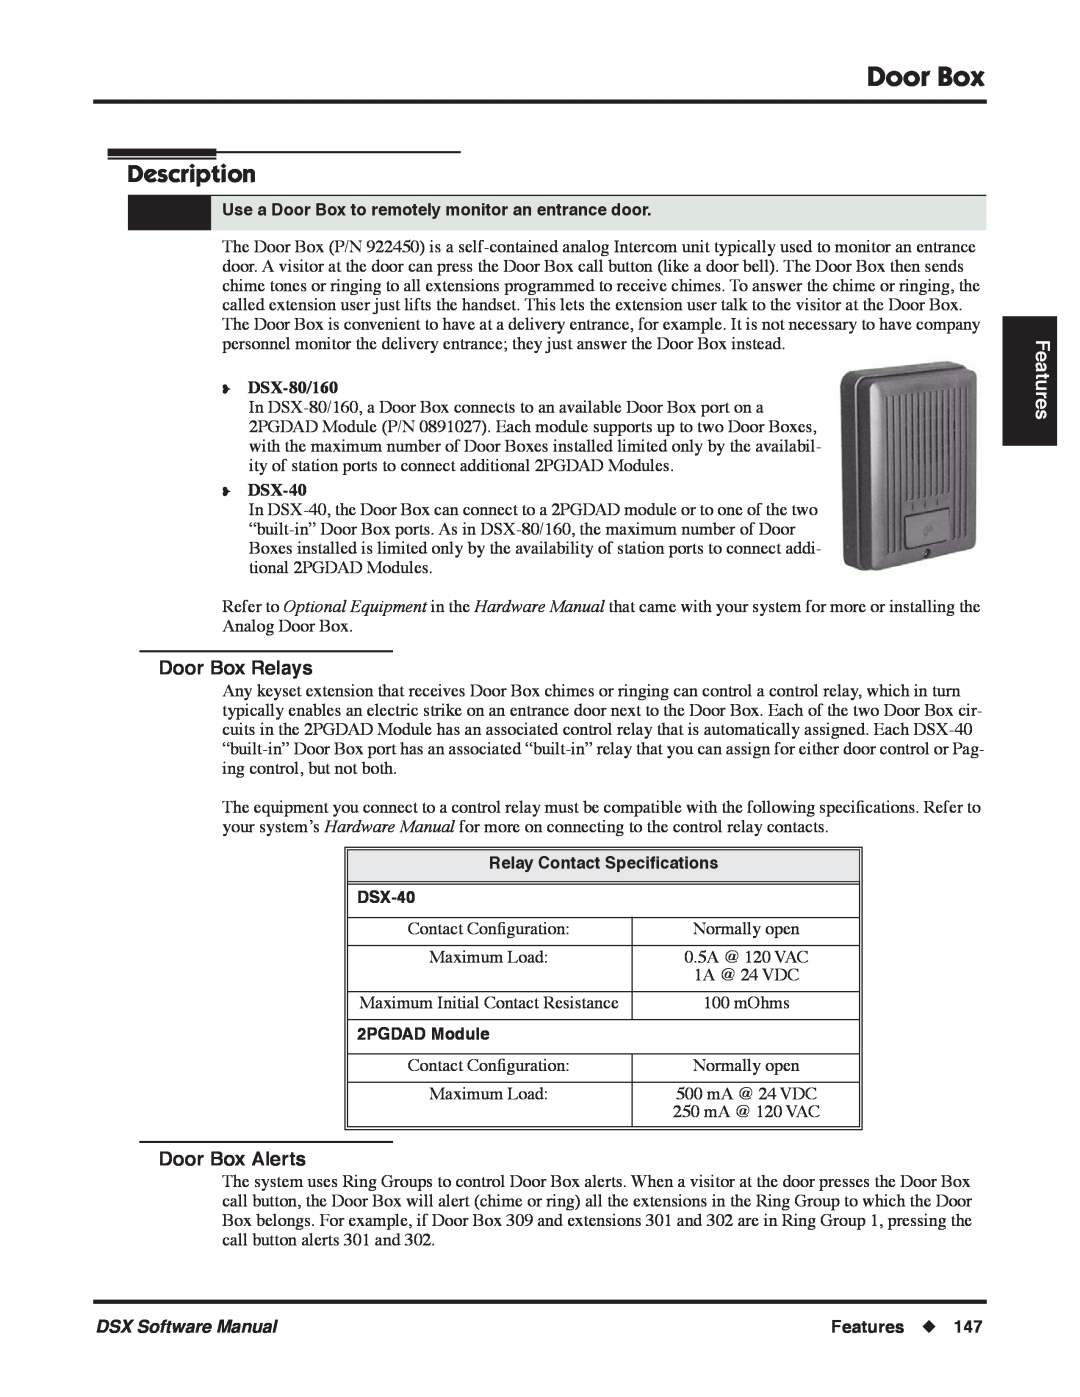 NEC P Description, Door Box Relays, Door Box Alerts, Features, DSX-80/160, Relay Contact Speciﬁcations DSX-40 